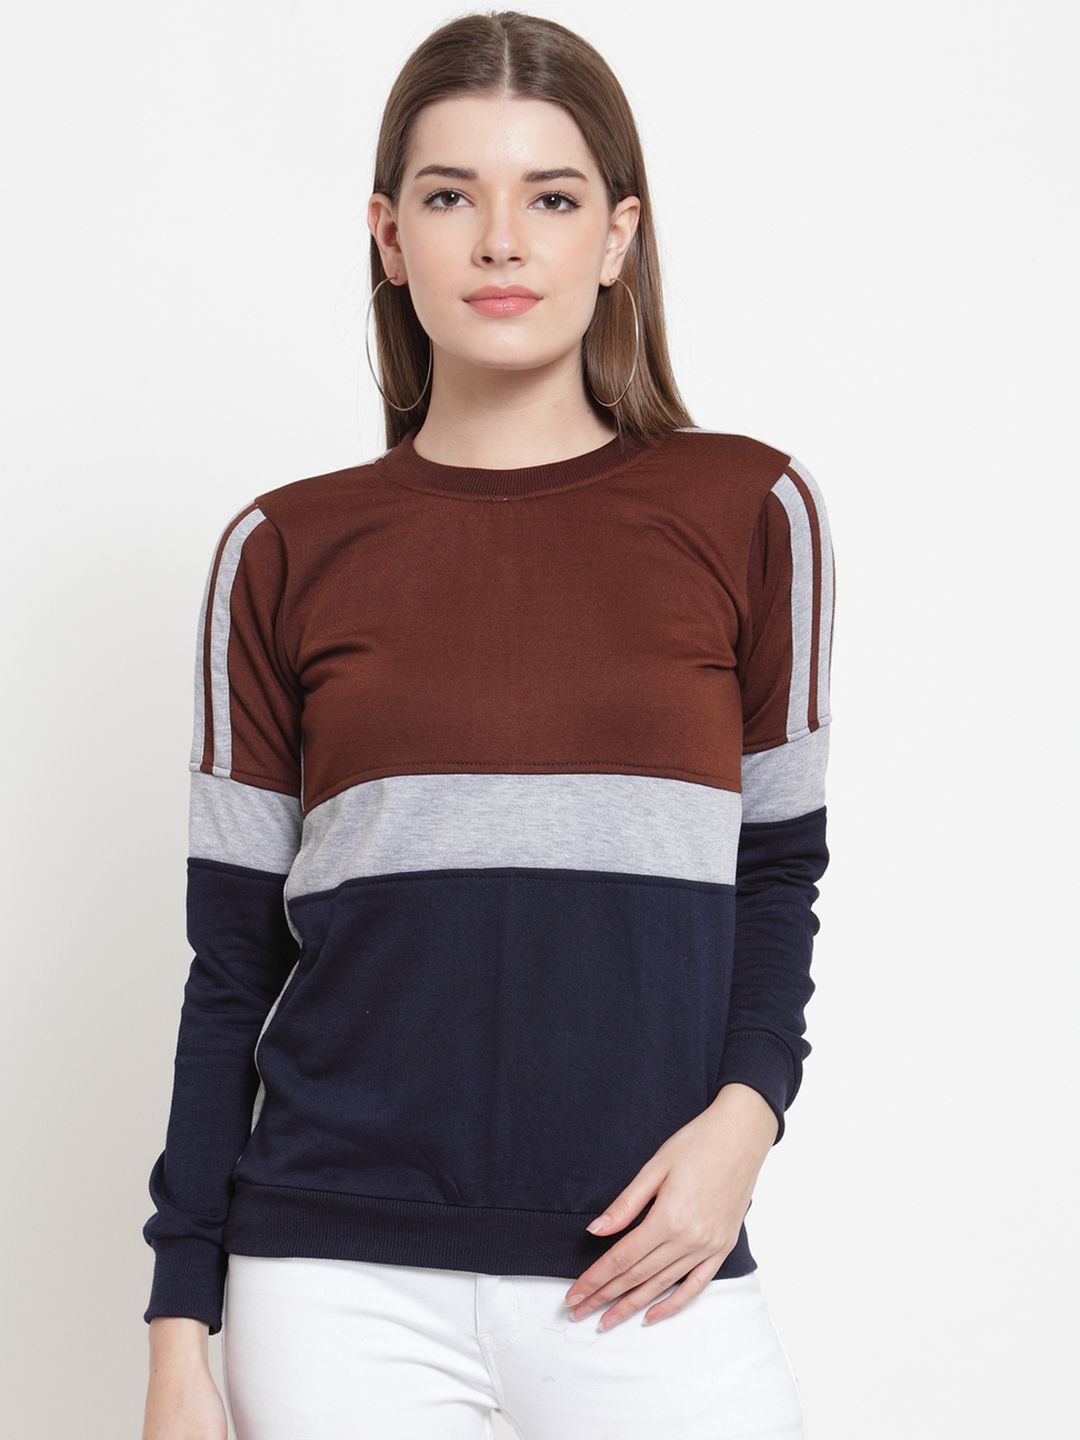 Belle Fille Women Brown & Navy Blue Colourblocked Sweatshirt Price in India